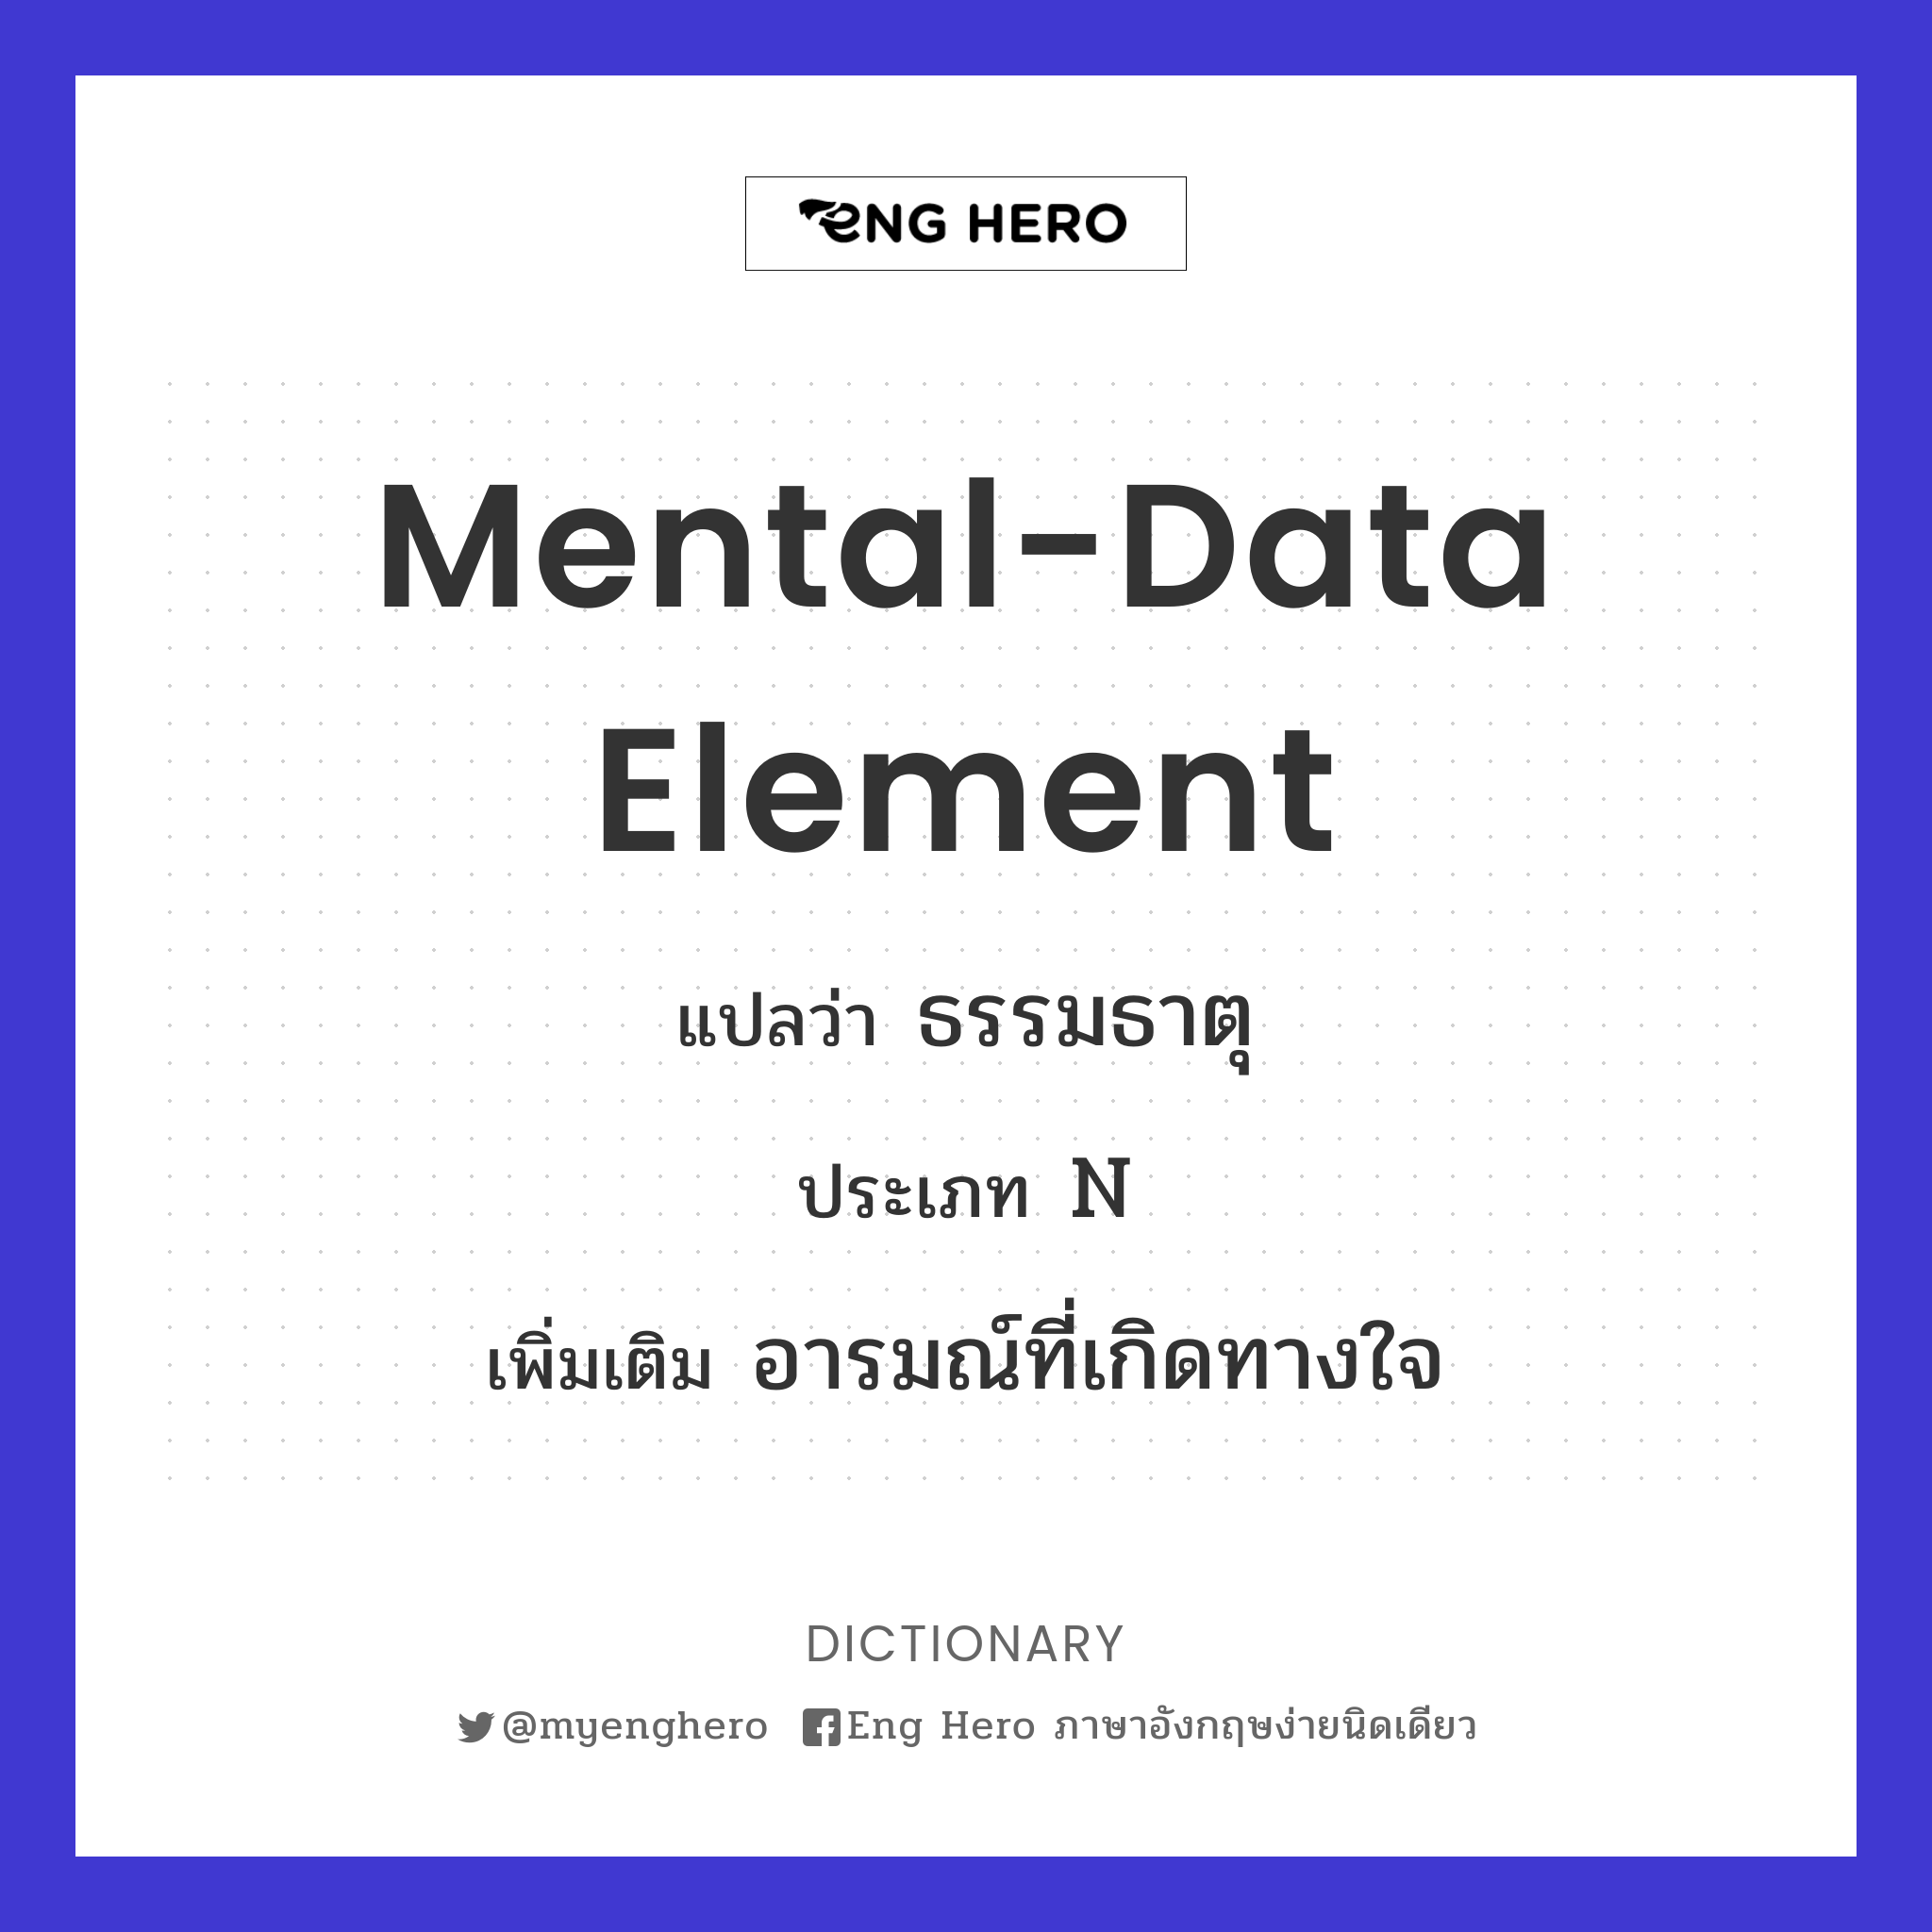 mental-data element